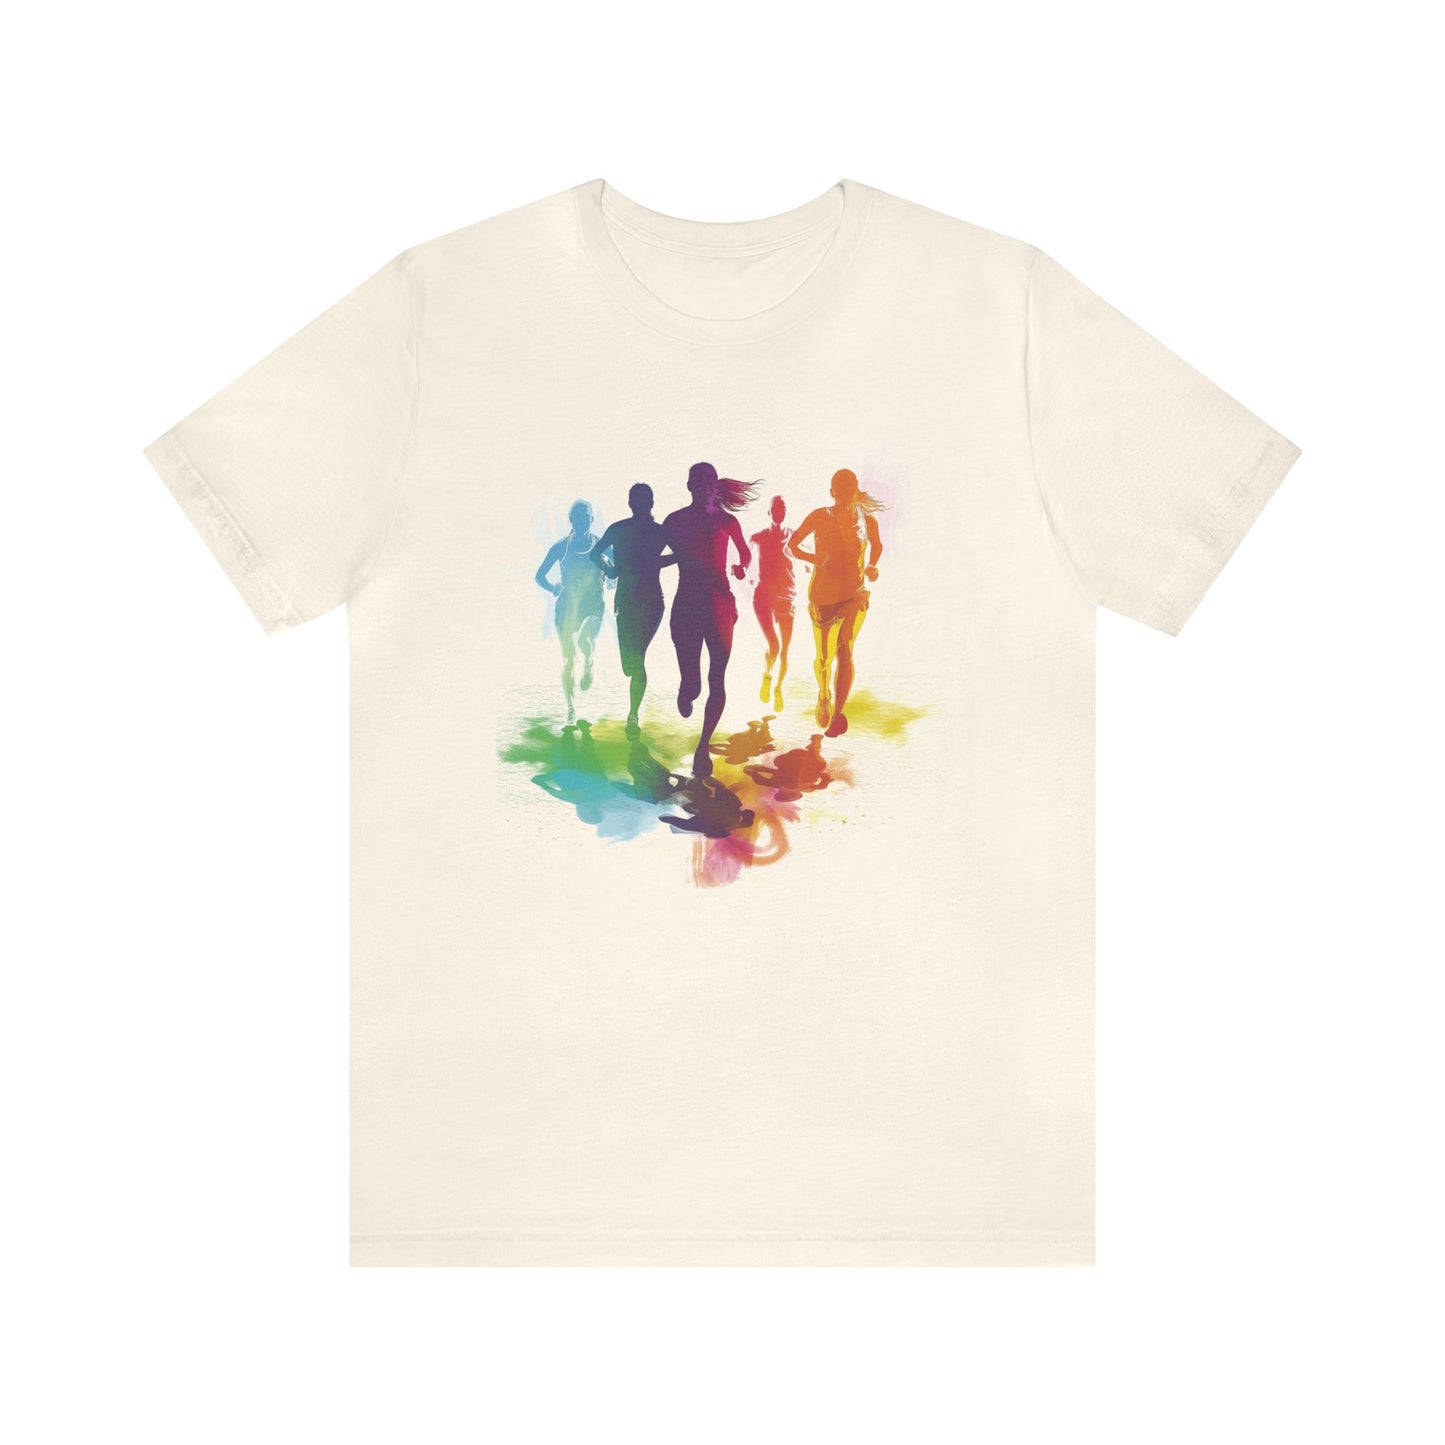 LGBTQ Runner Shirt Marathon Running Tshirt Half Marathon Tee Rainbow Color Running Shirt Gift for Runner Graphic Running T-Shirt Running Cloths